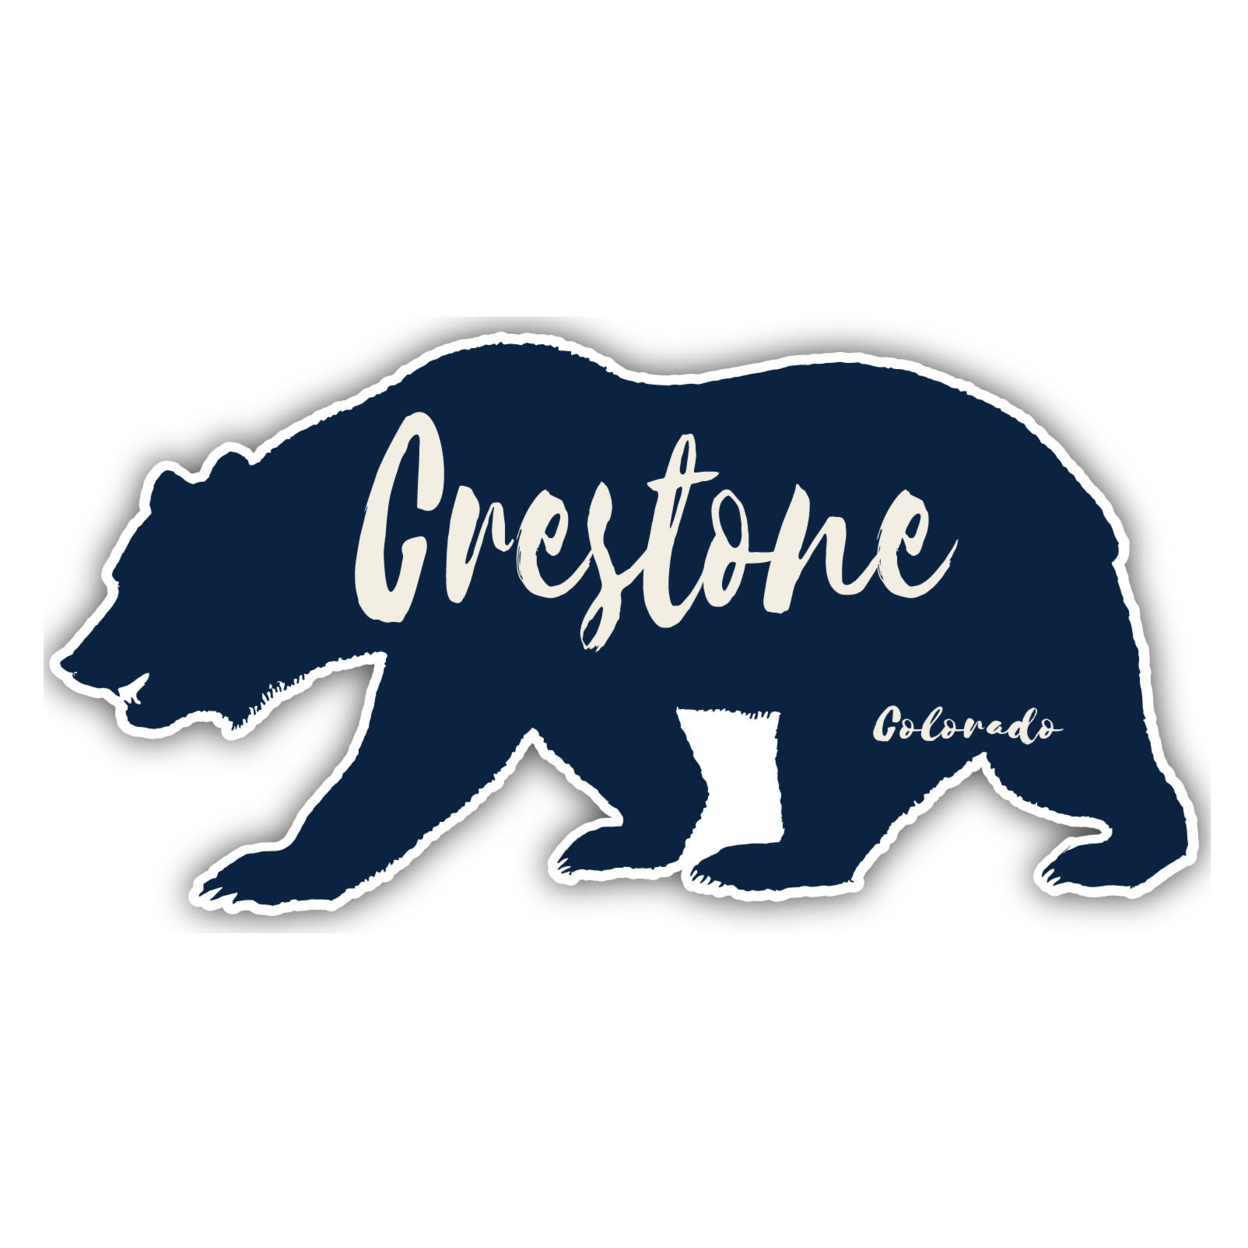 Crestone Colorado Souvenir Decorative Stickers (Choose Theme And Size) - Single Unit, 6-Inch, Tent